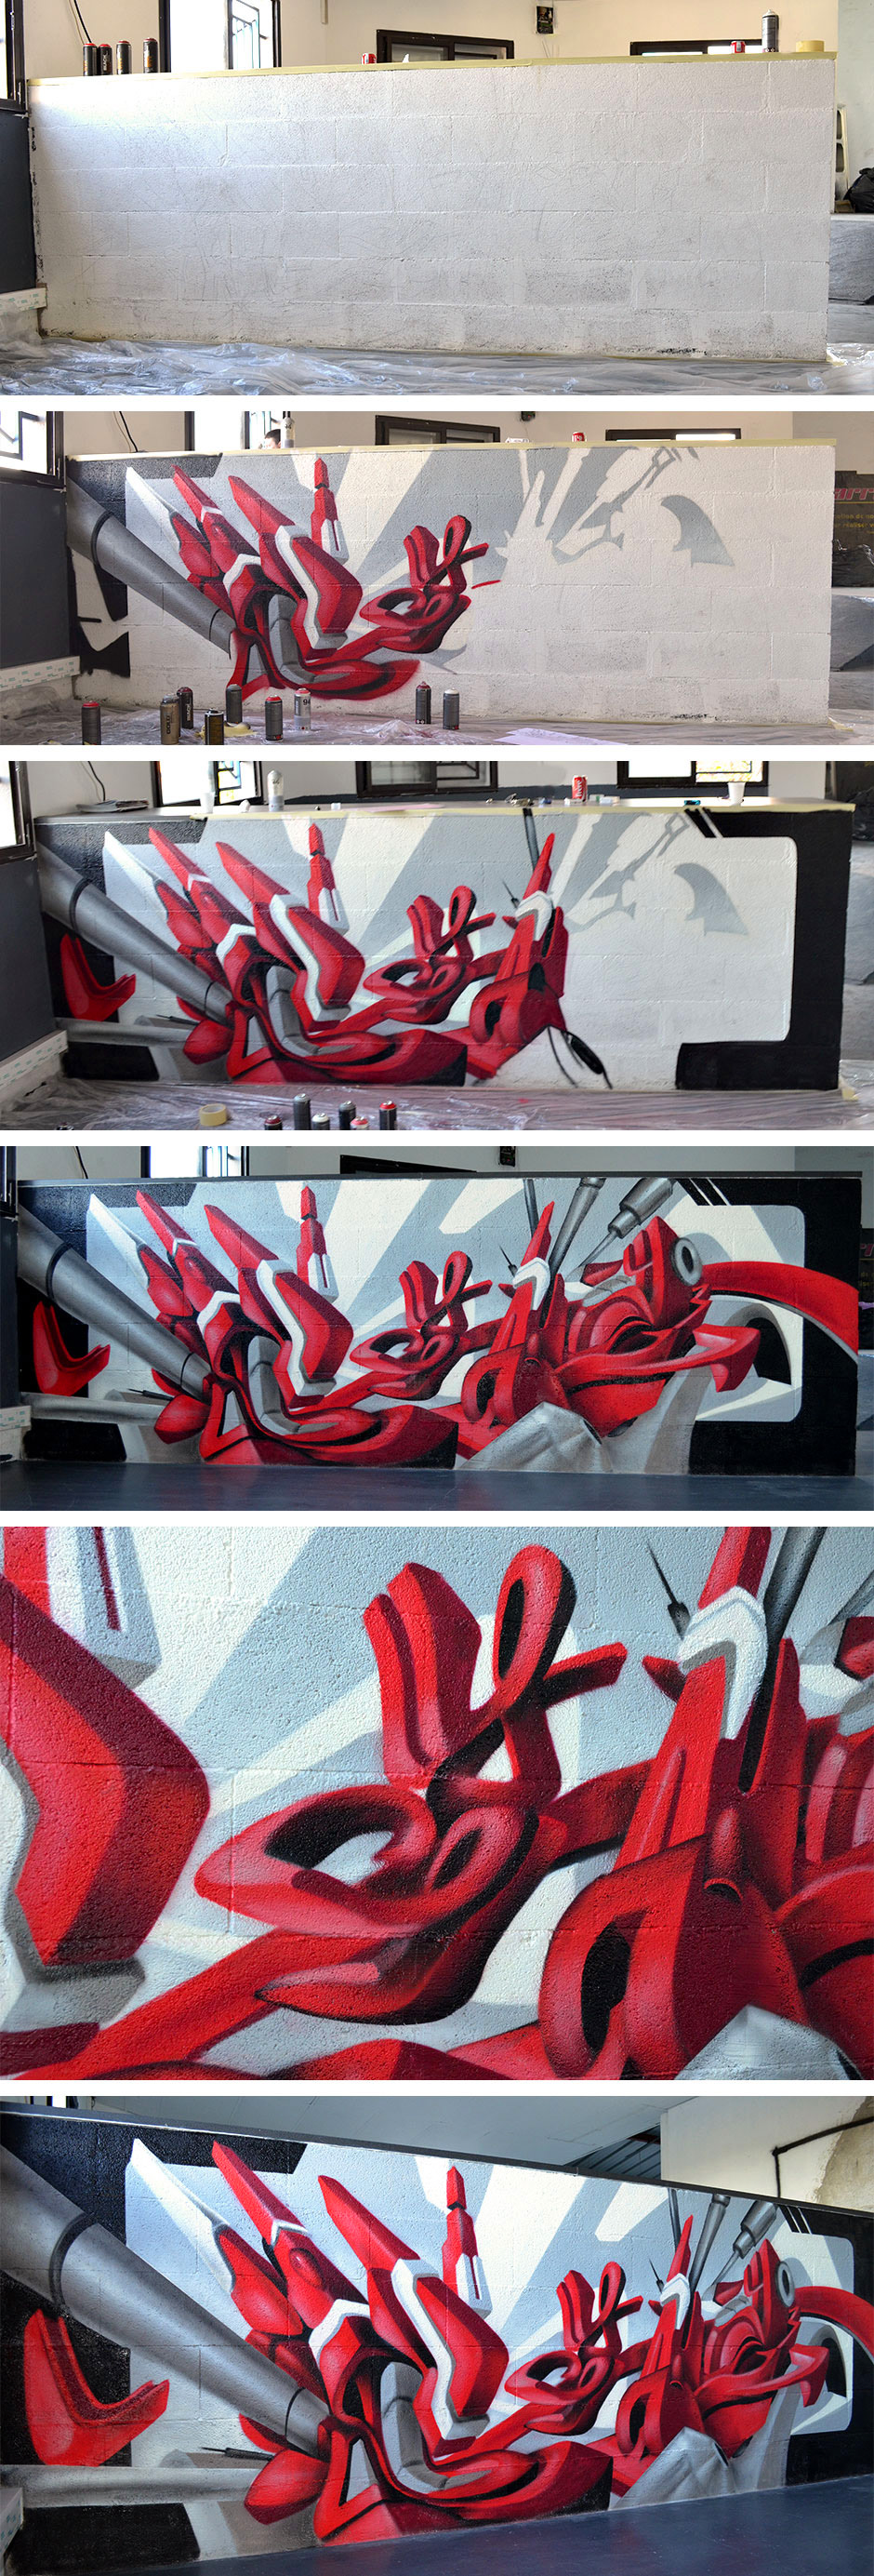 Deco 3d graffiti toulouse graff swip swiponer wxp 31